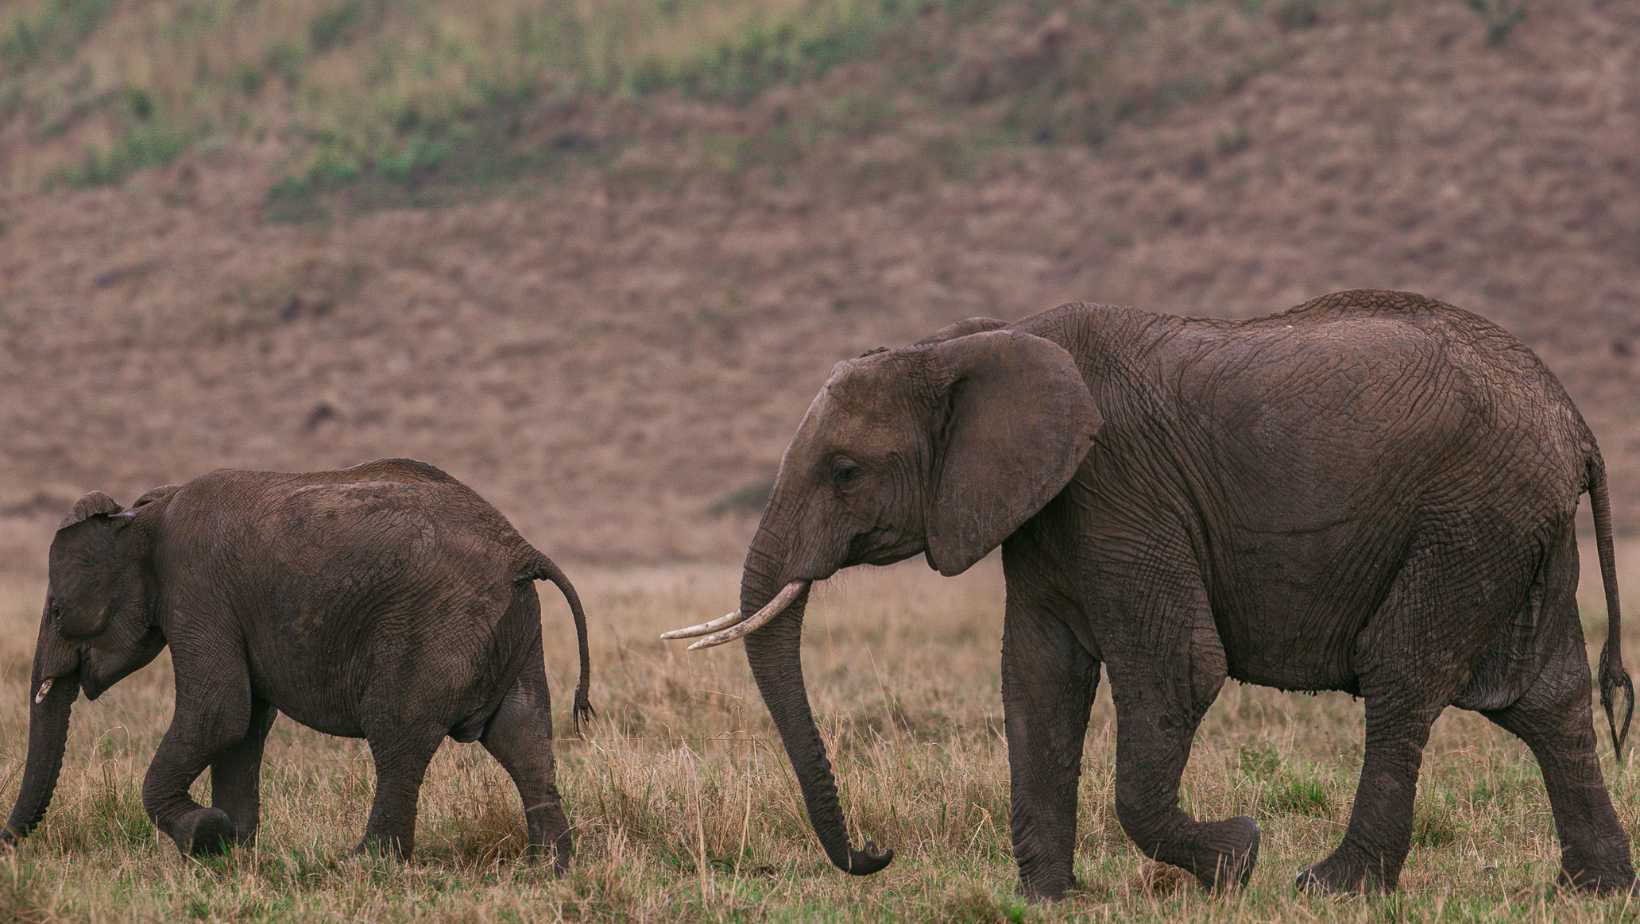 Zim elephants migrating to Botswana as water scarcity increases